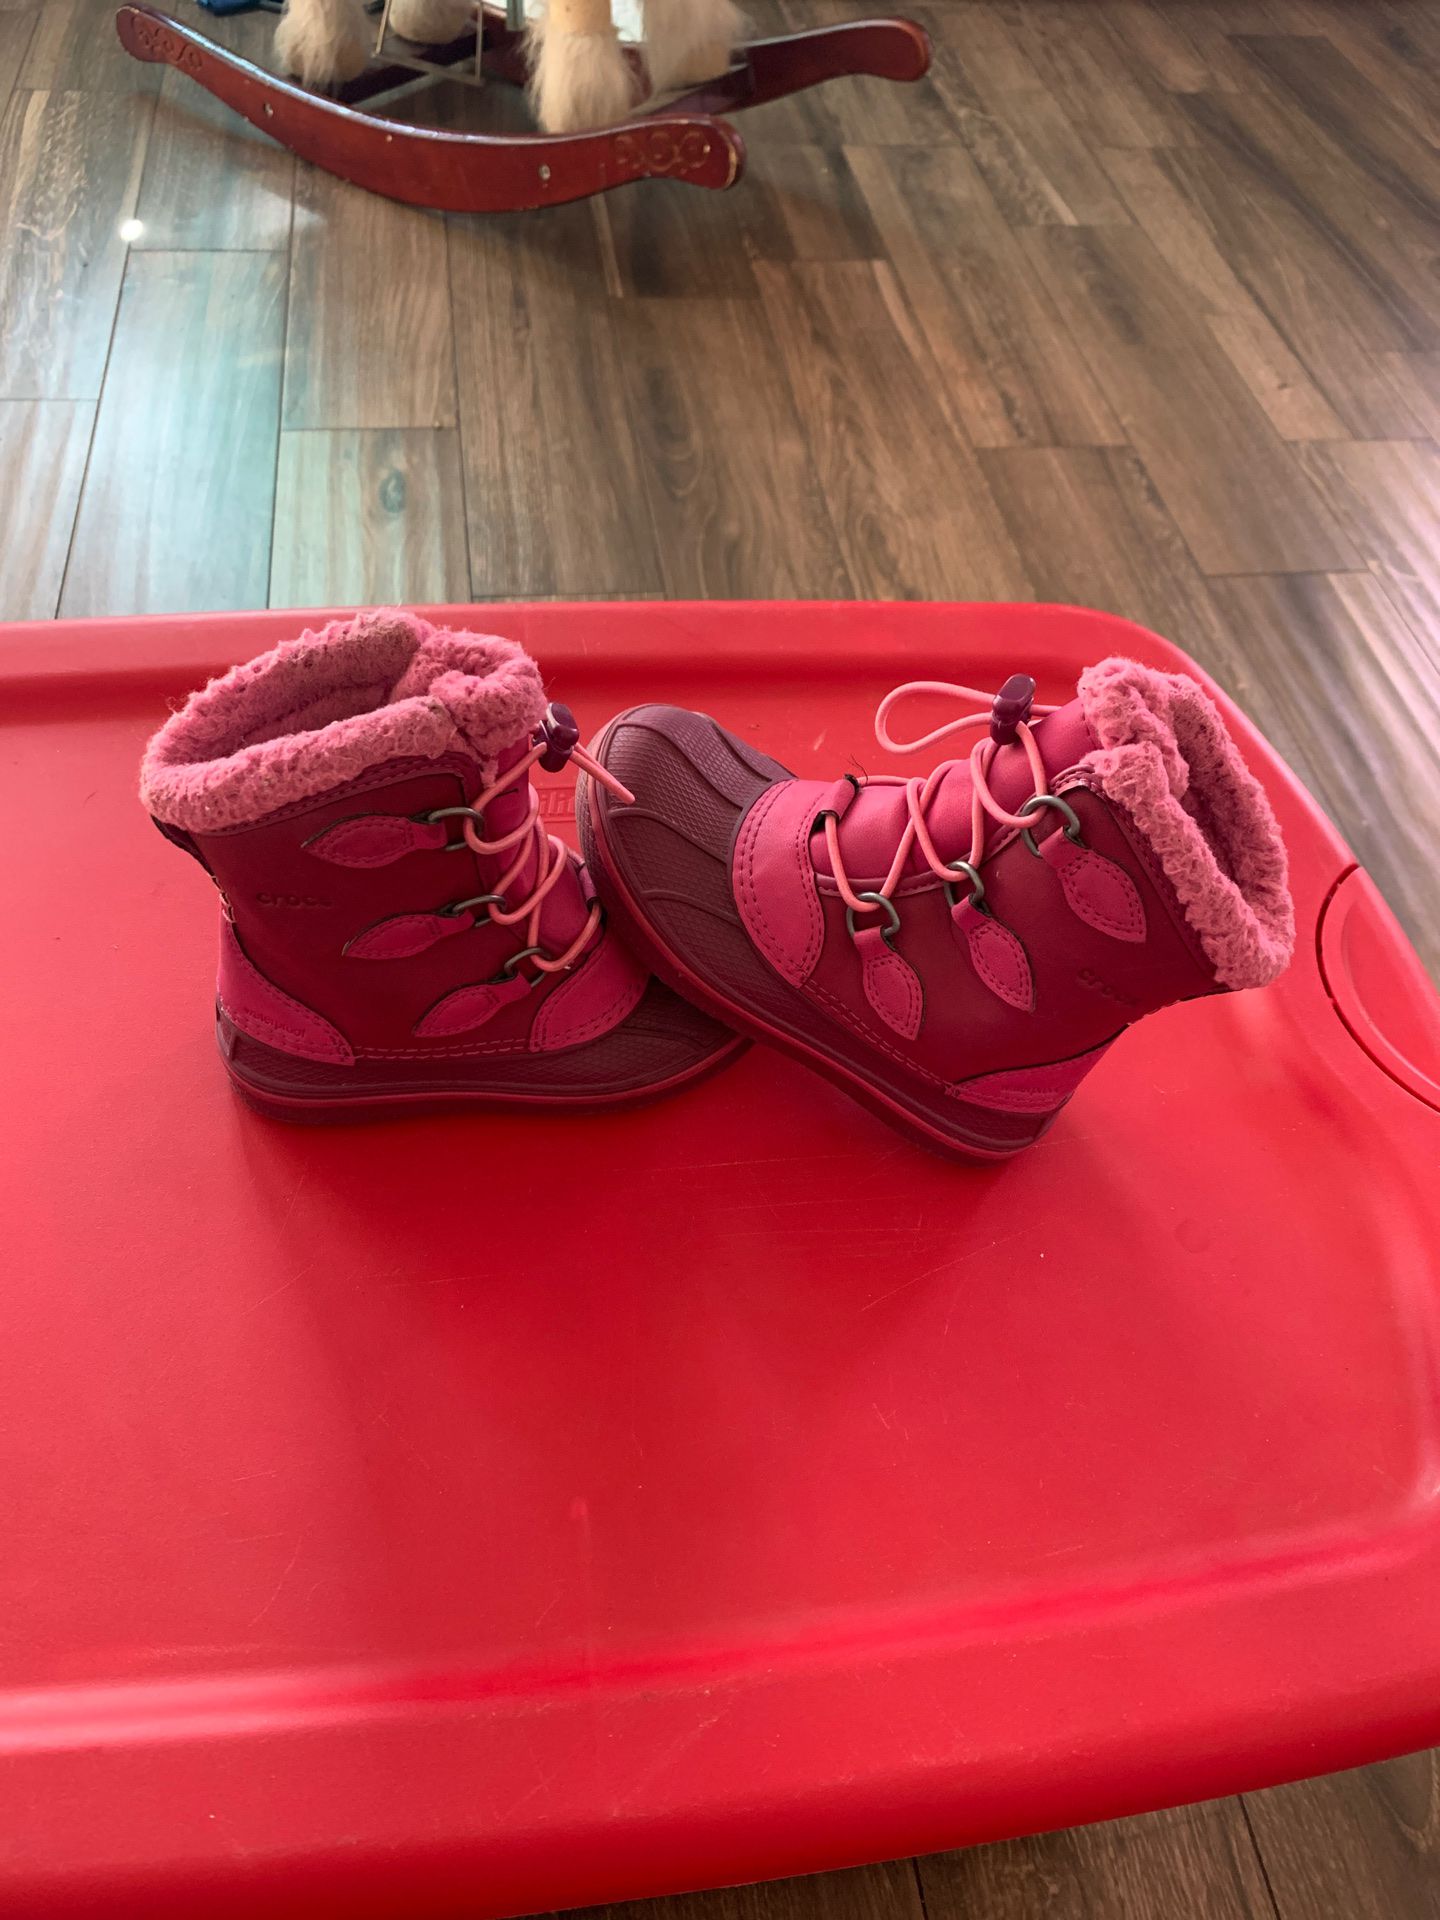 Crocs boots pink Toddler girls size (c9)